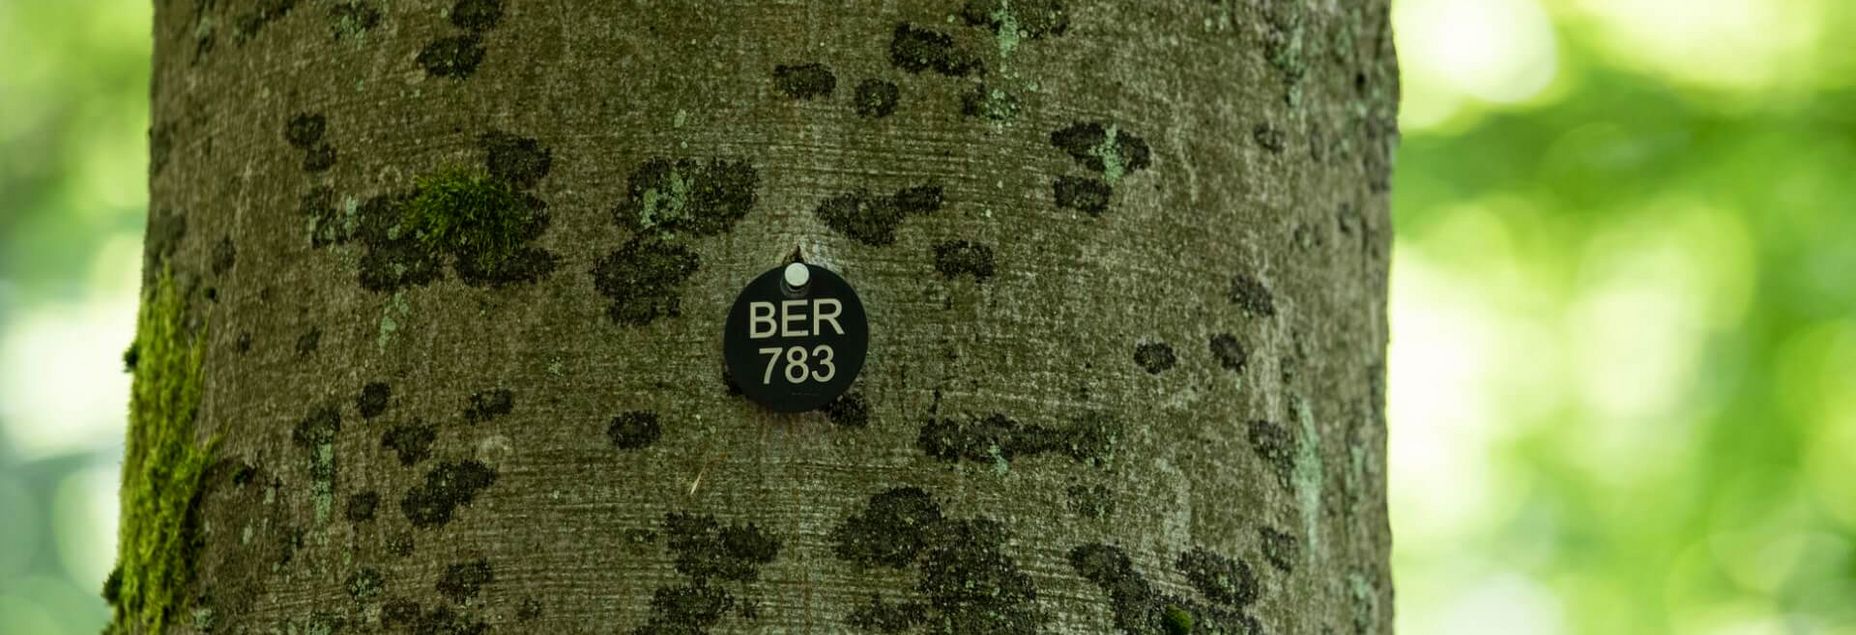 Baum BER 783 - Plakette